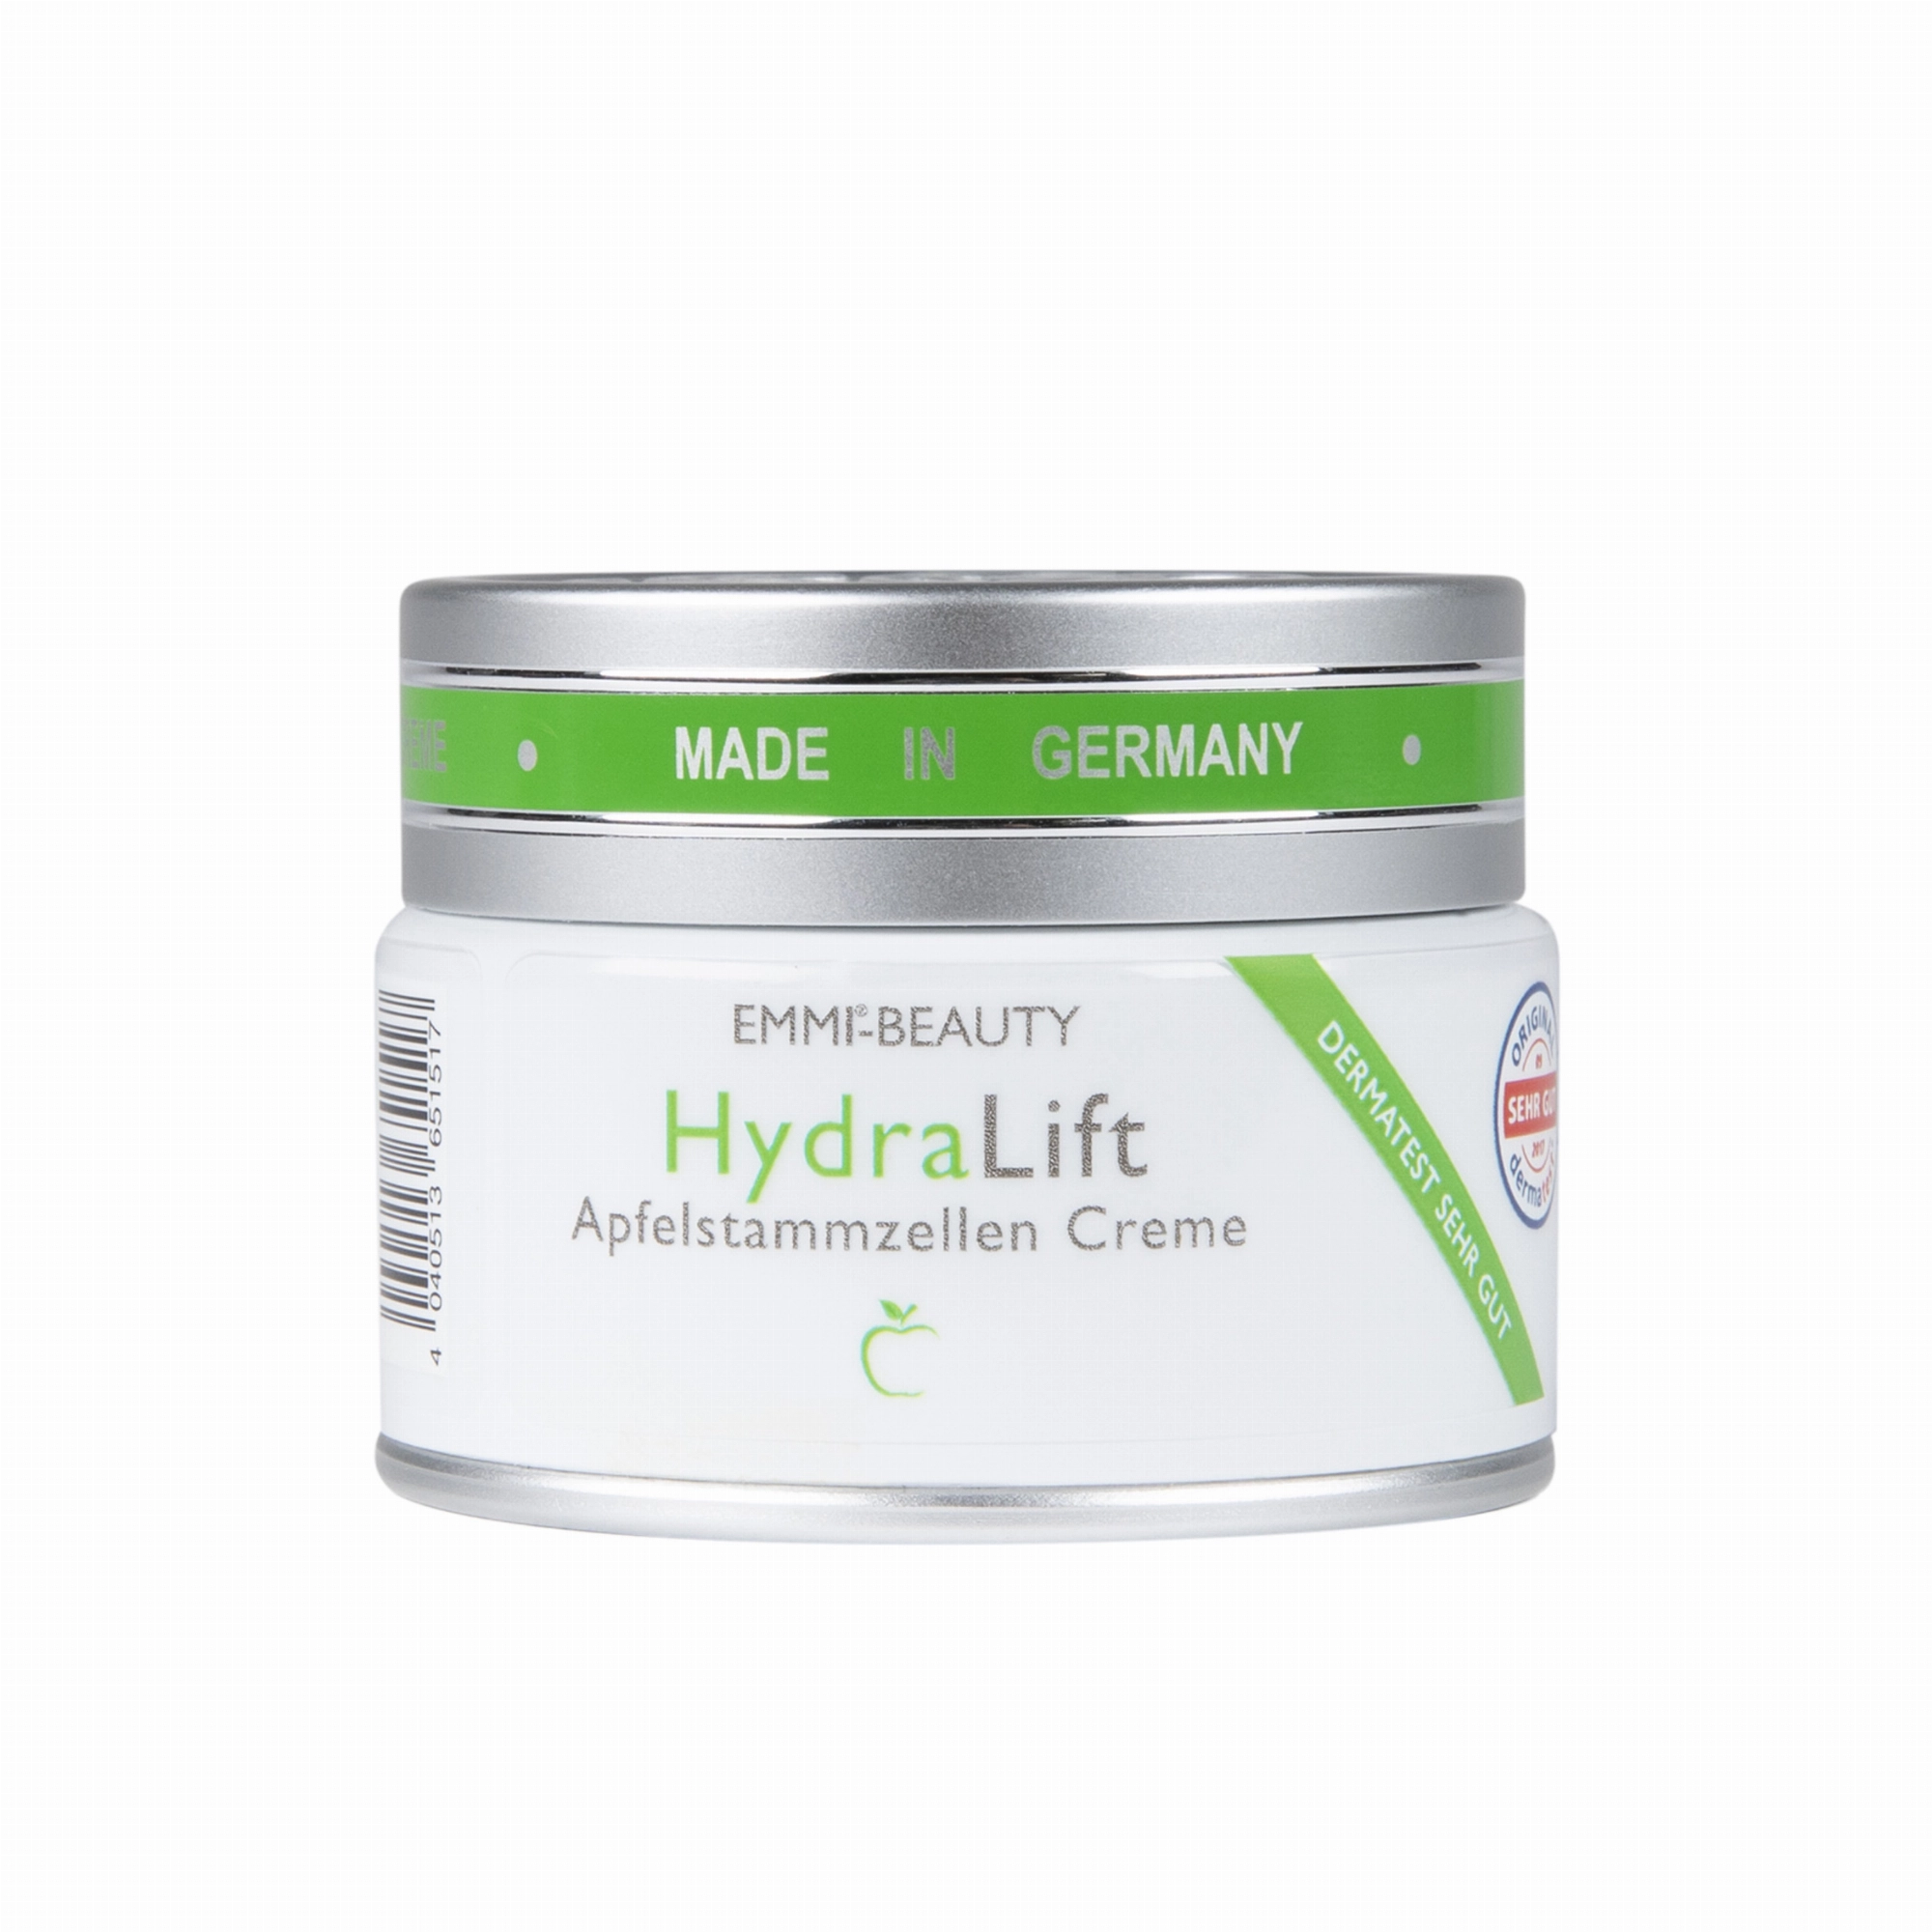 HydraLift Apfelstammzellen Cremegel - 30ml